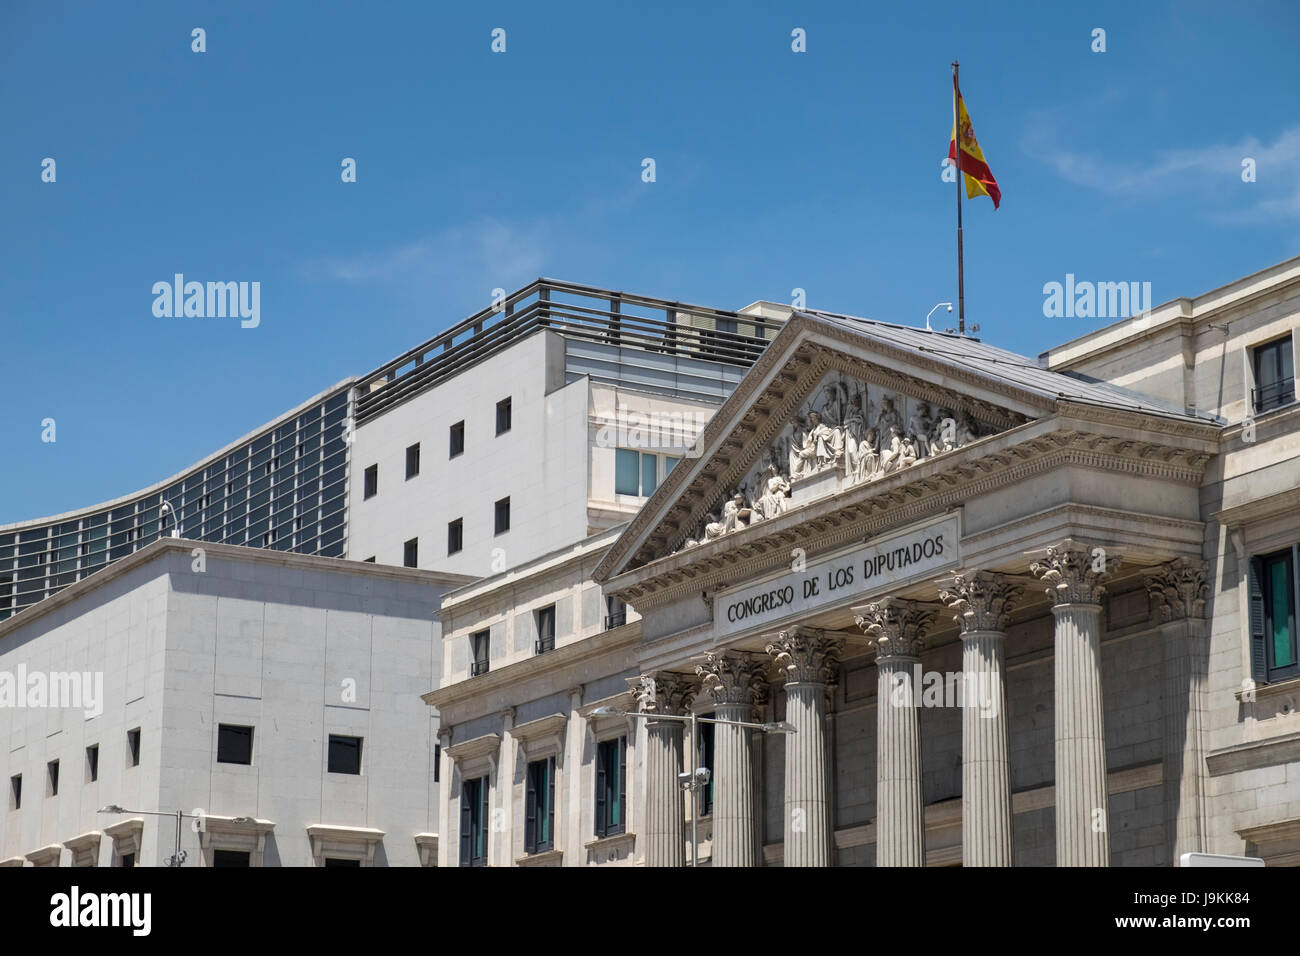 Klassizistische Fassade des Congreso de Los Diputados Gebäude, niedriger Haus der gesetzgebende Niederlassung der Cortes Generales, Spanien, Madrid. Stockfoto